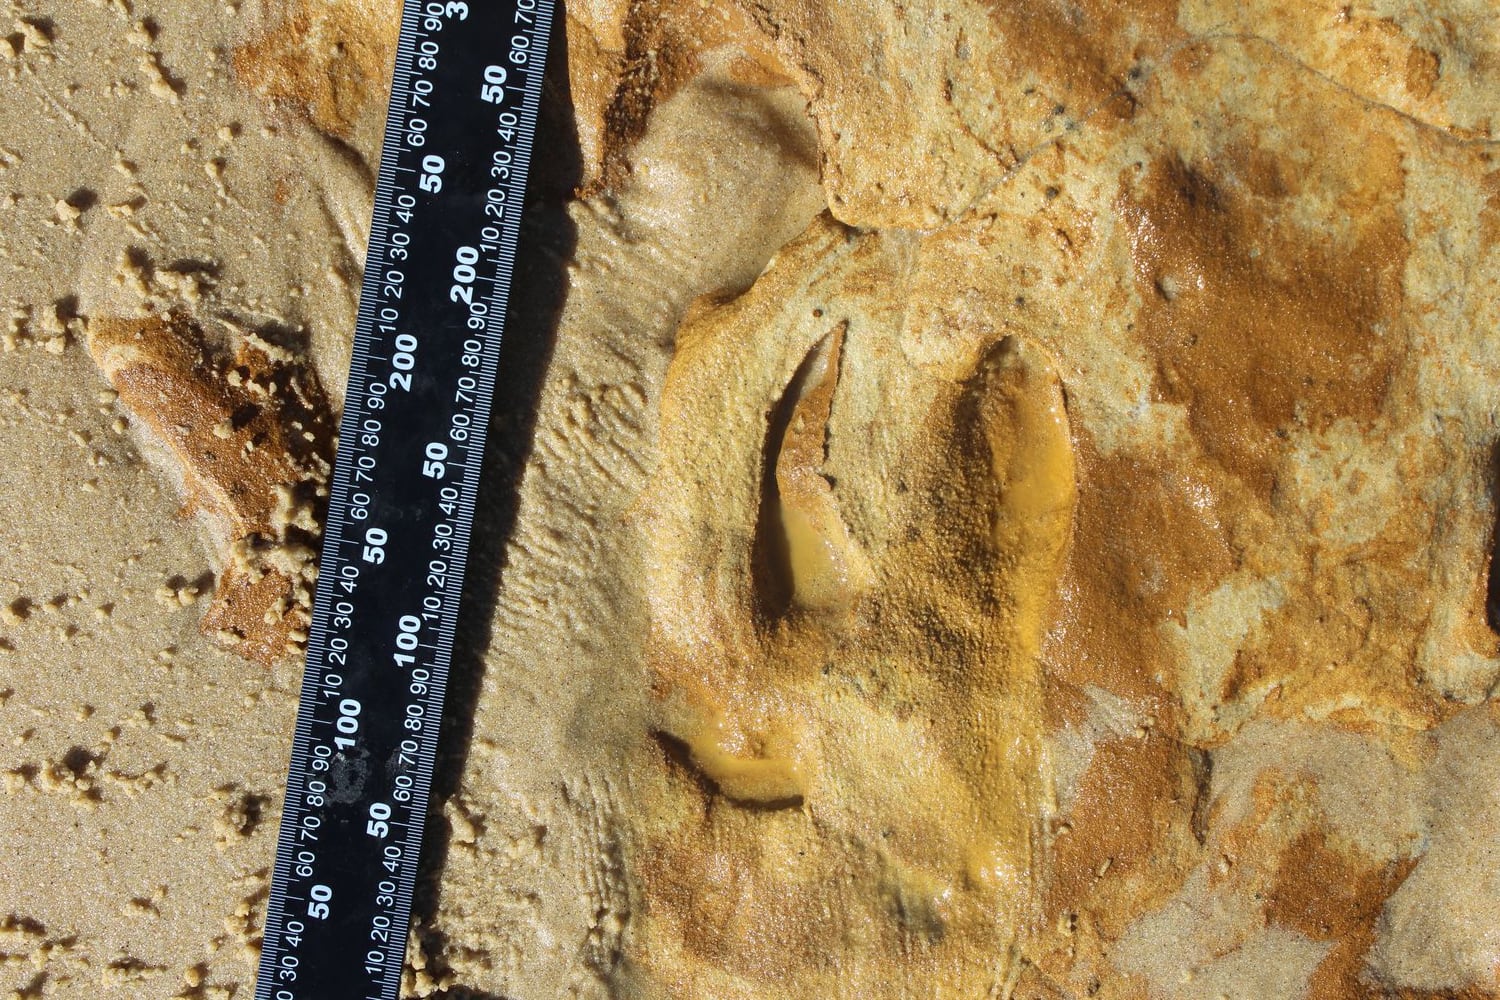 Footprint 'Suidichnus galani' found in Matalascañas.